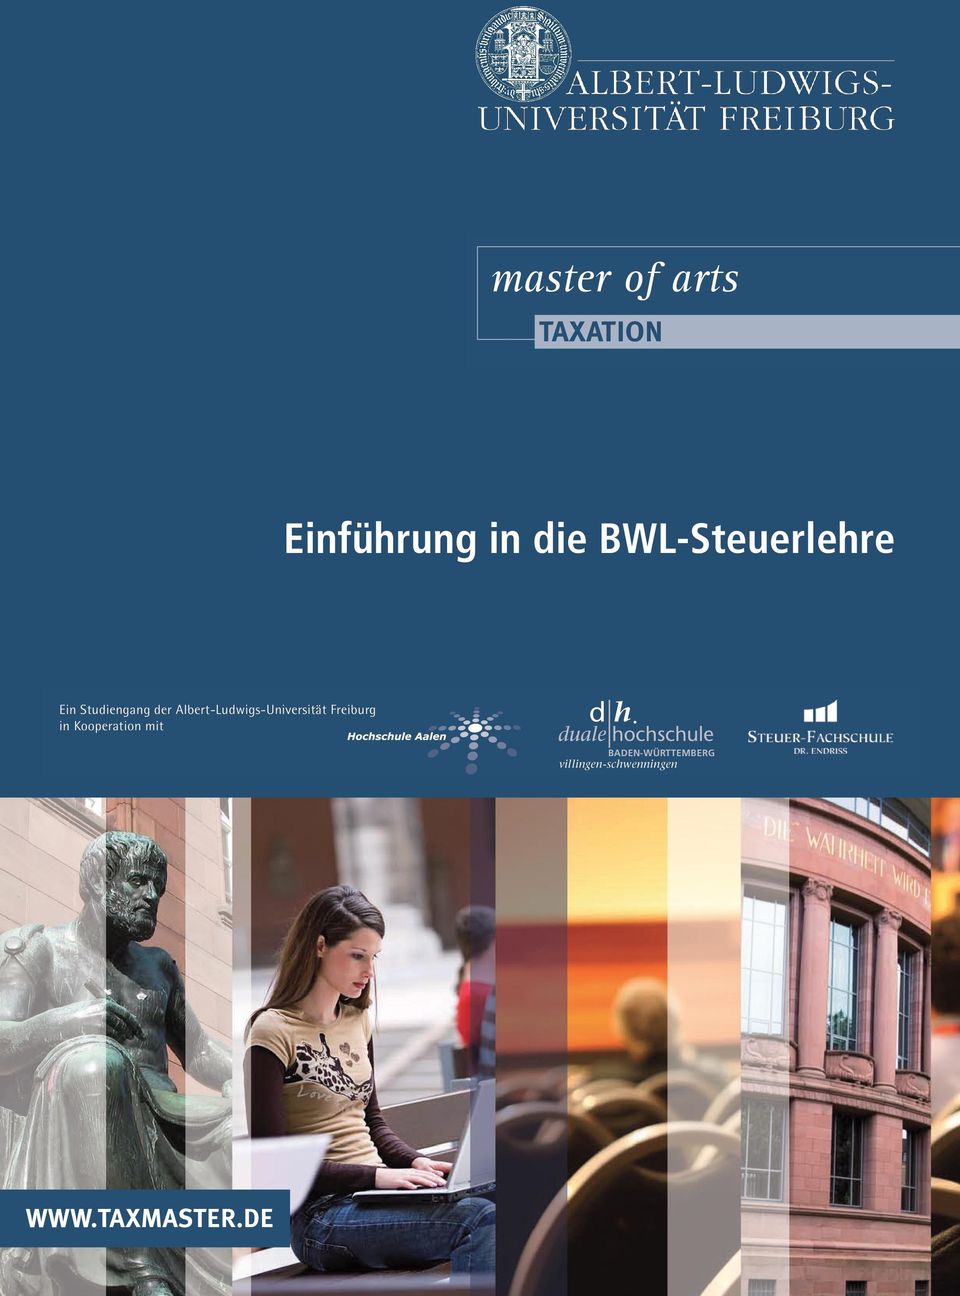 Albert-Ludwigs-Universität der Albert-Ludwigs-Universität Freiburg Freiburg in Kooperation mit in